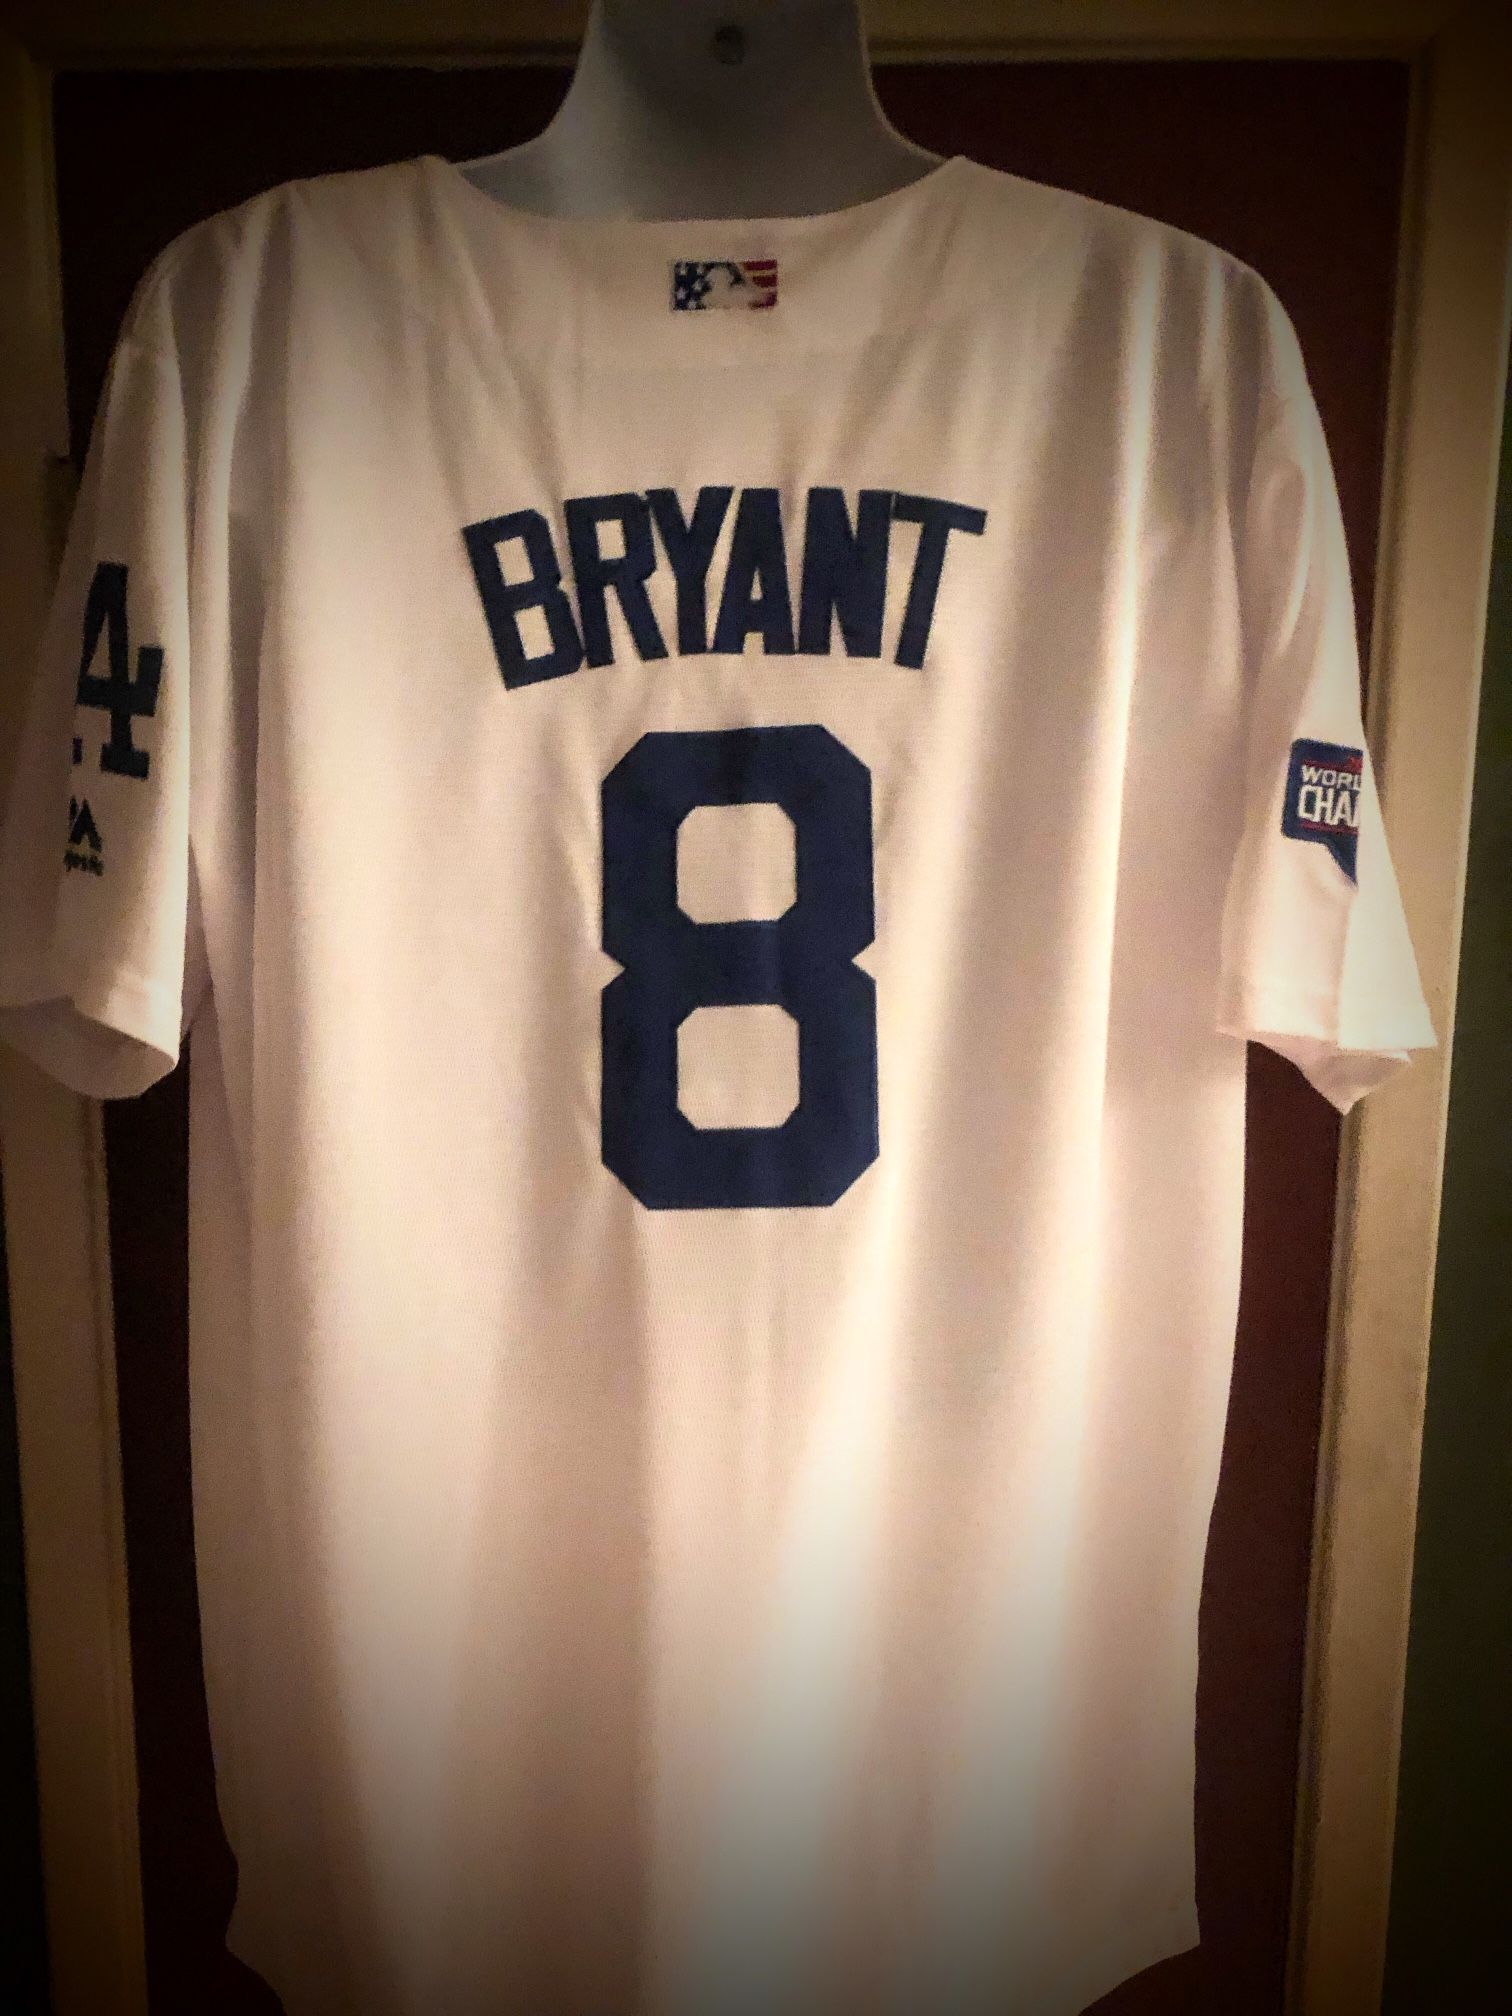 Los Angeles Dodgers #8 Kobe Bryant Commemorative Jersey for Sale in  Gardena, CA - OfferUp